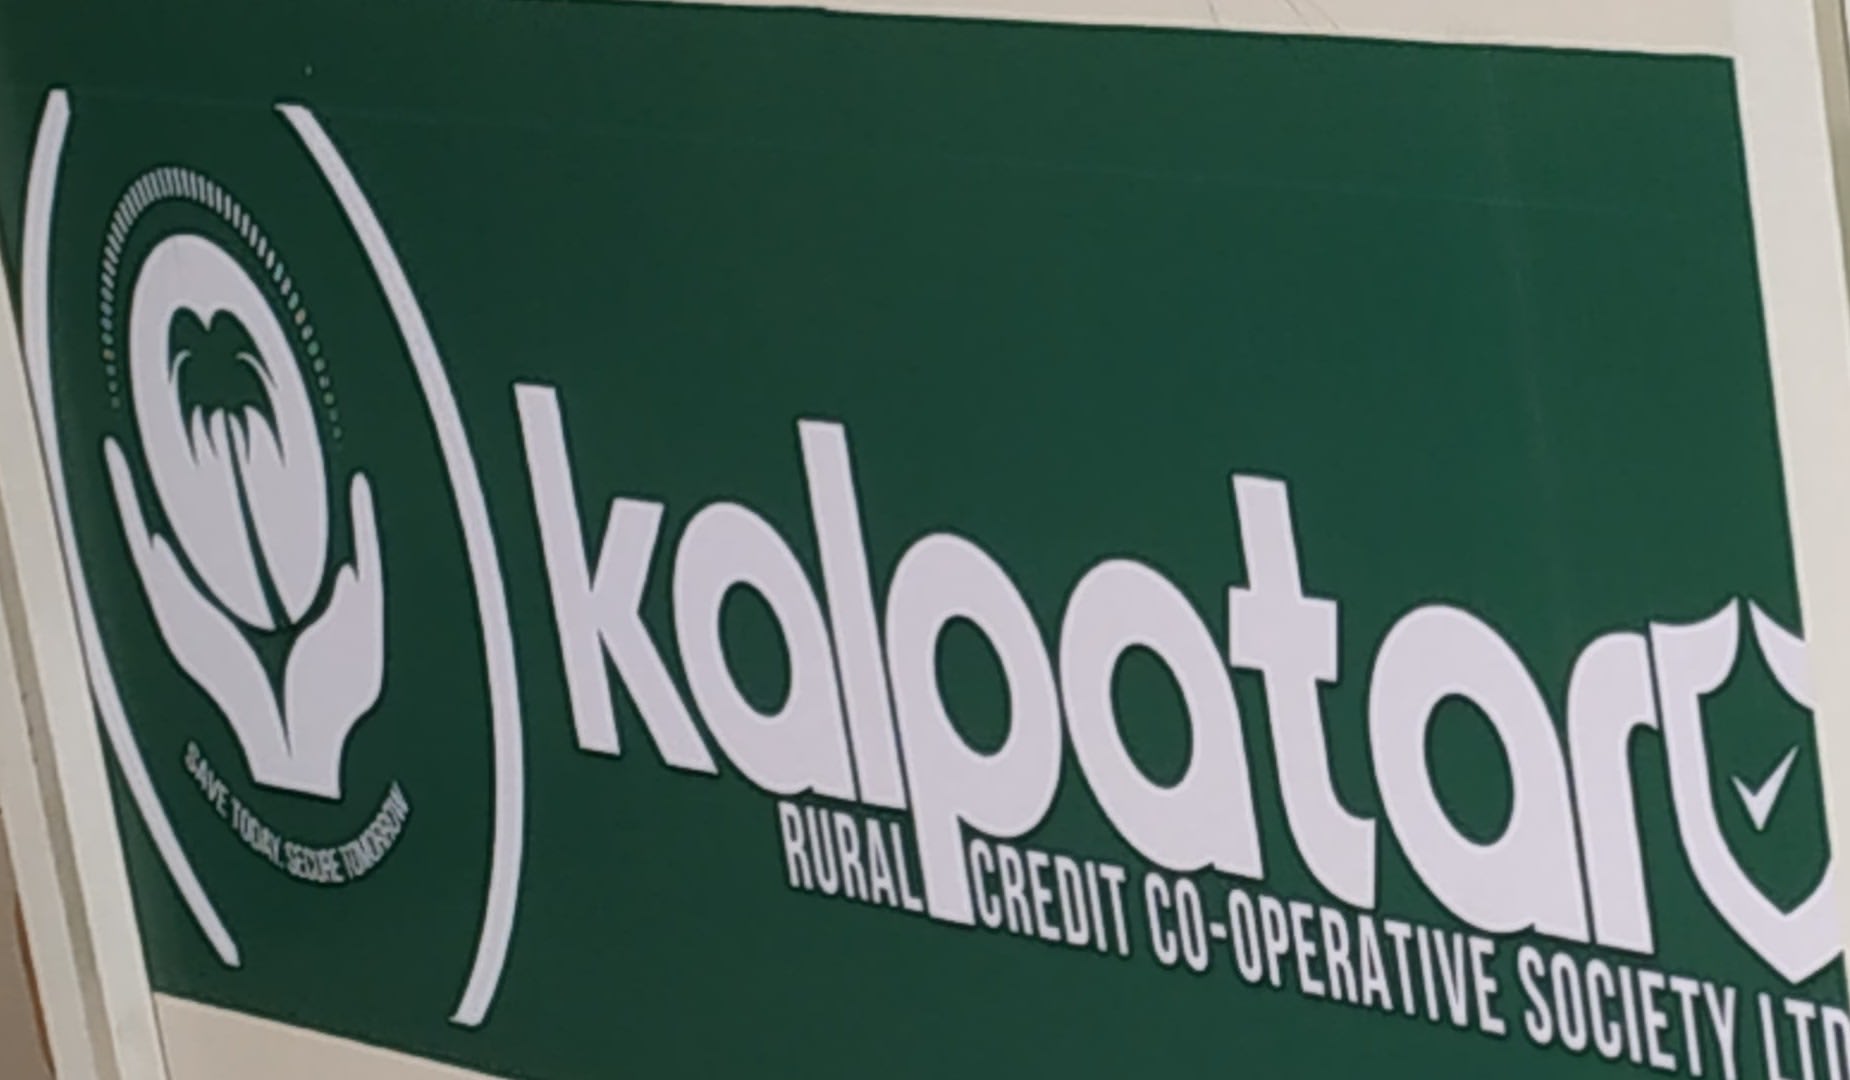 Kalpataru Rural Credit Co-operative Society